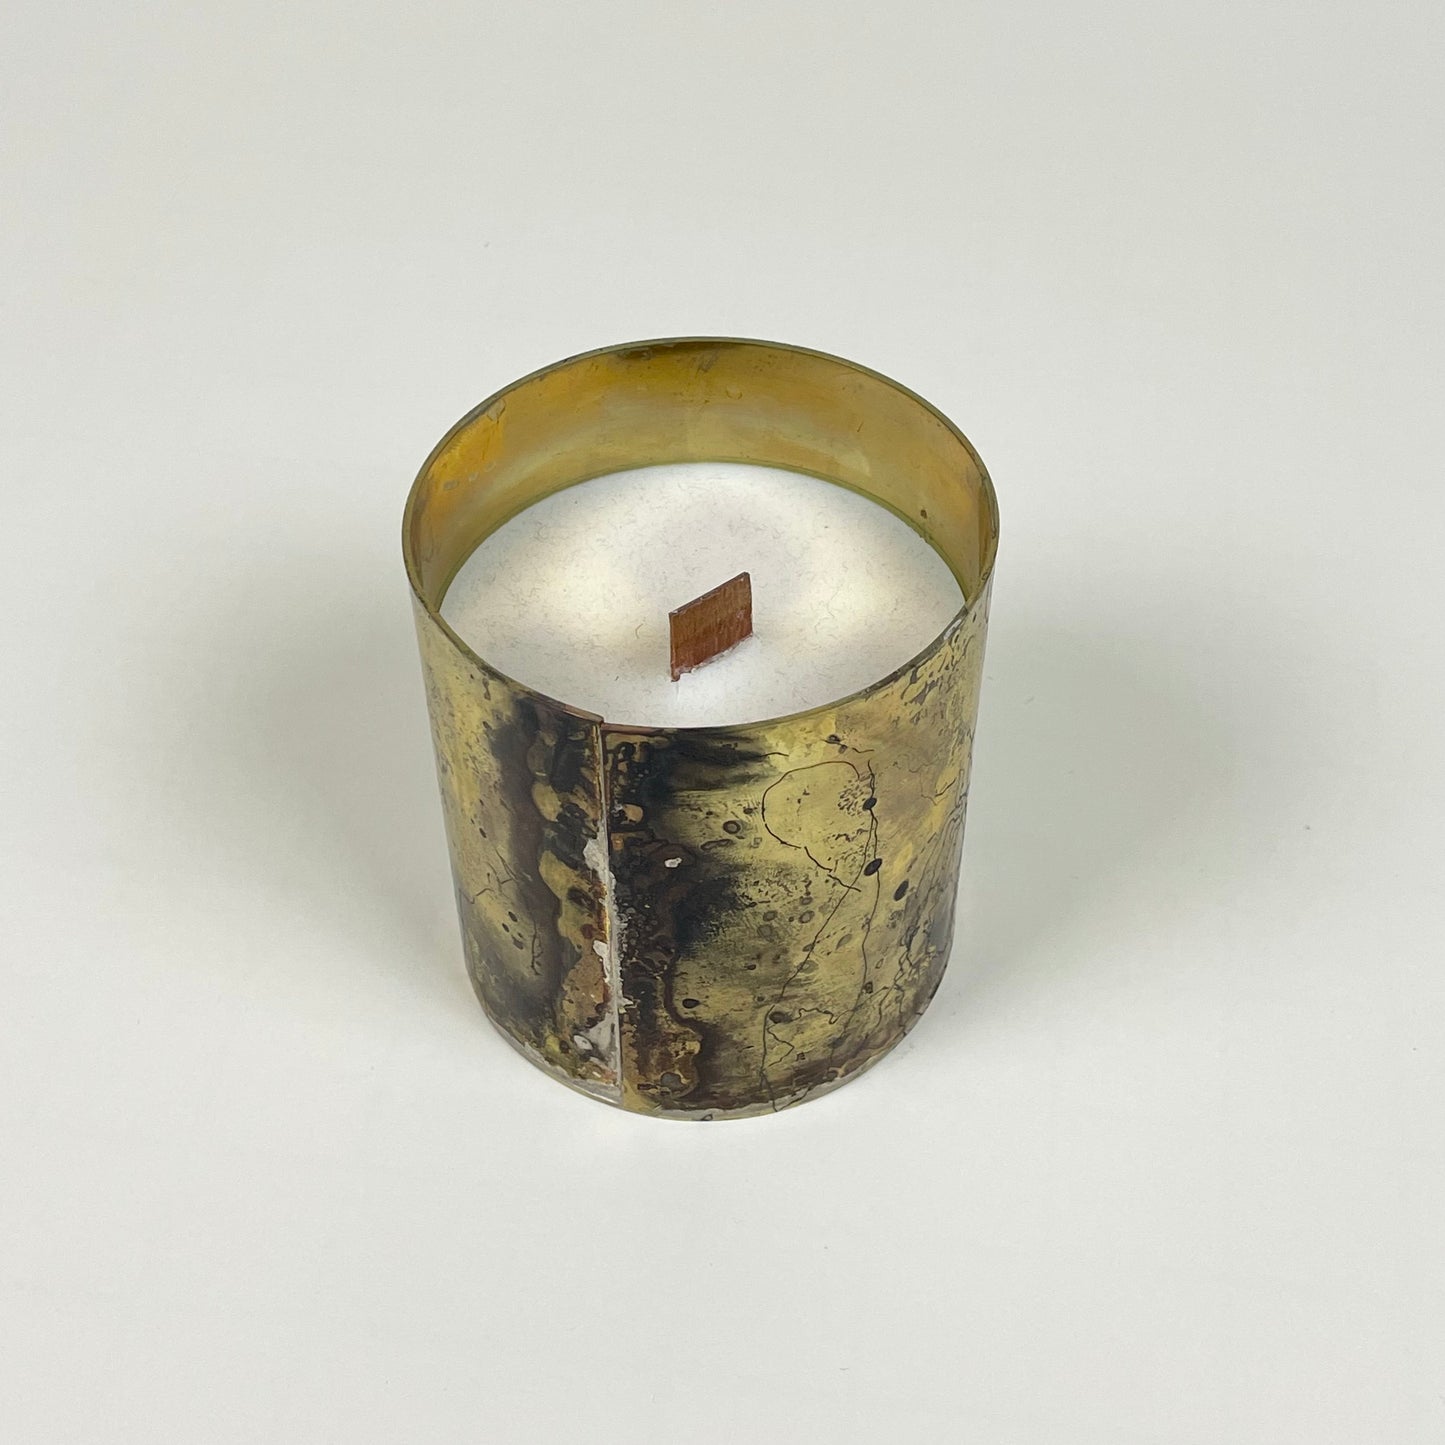 Incense candle by Elias Dahl